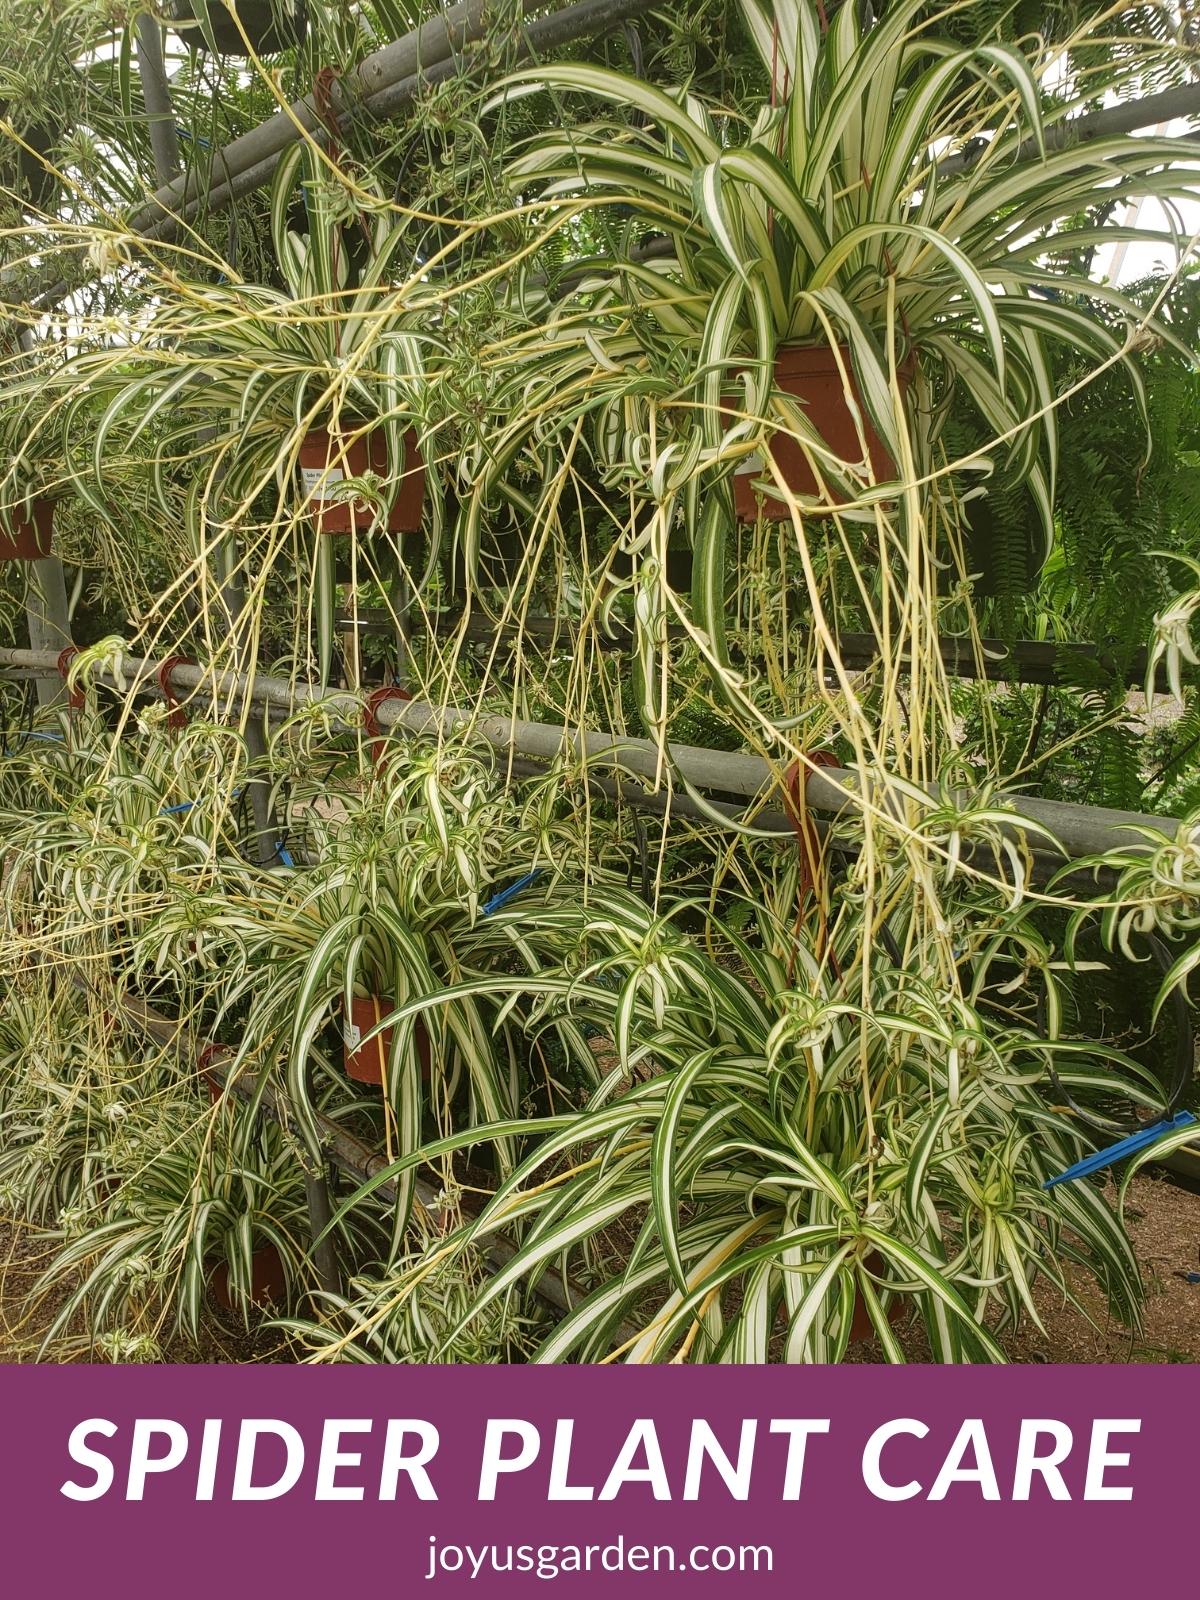  Nega rastlin pajkov: Kako gojiti Chlorophytum Comosum